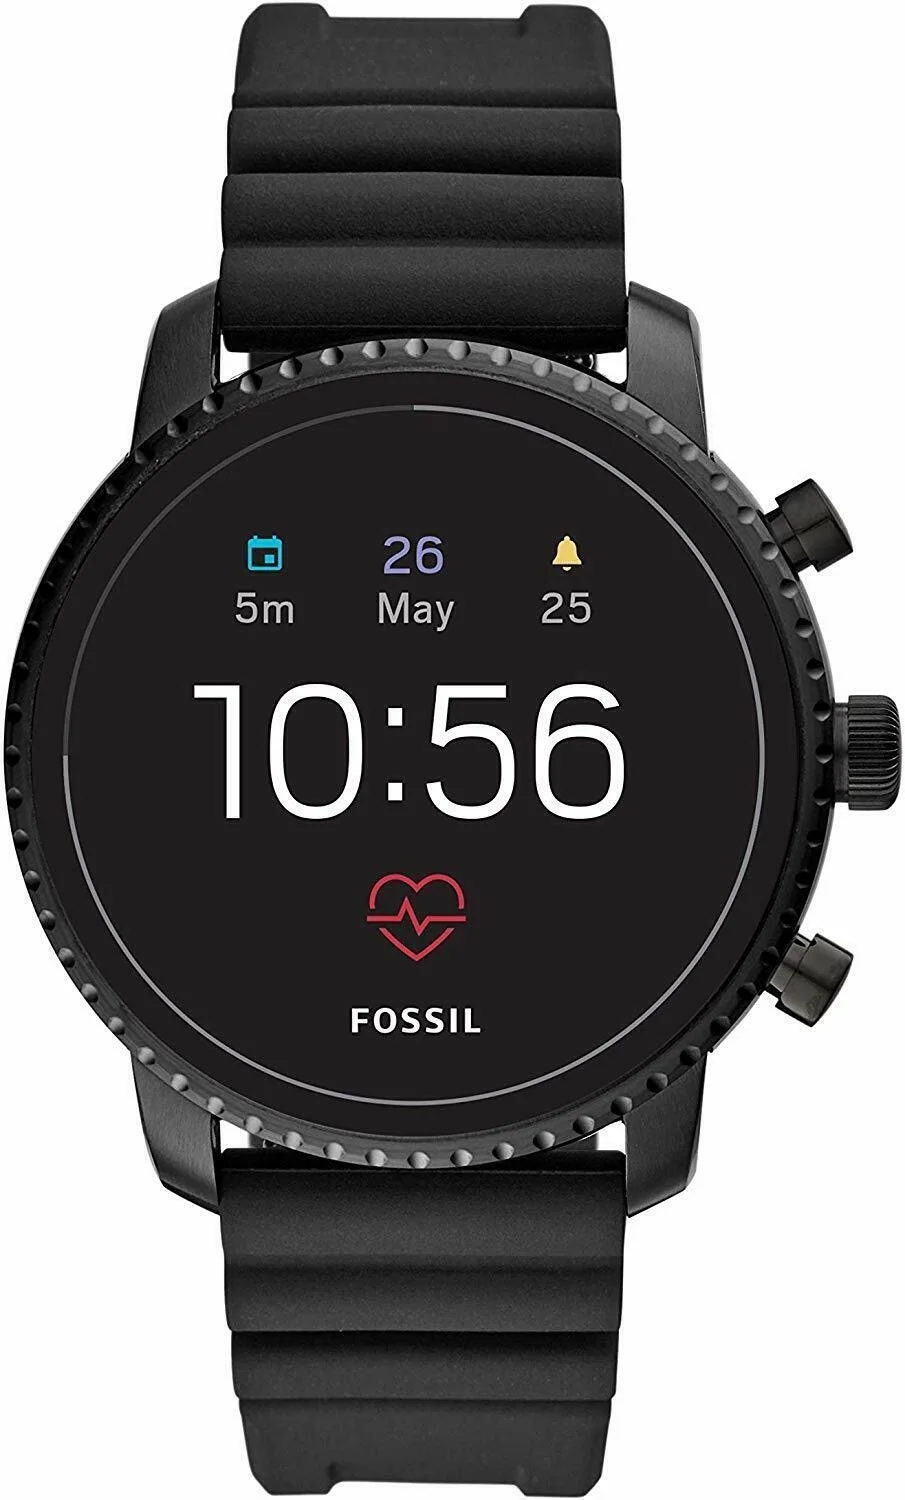 

Fossil FTW4018 Men's Gen 4 Explorist HR Silicone Touchscreen Smartwatch - Black